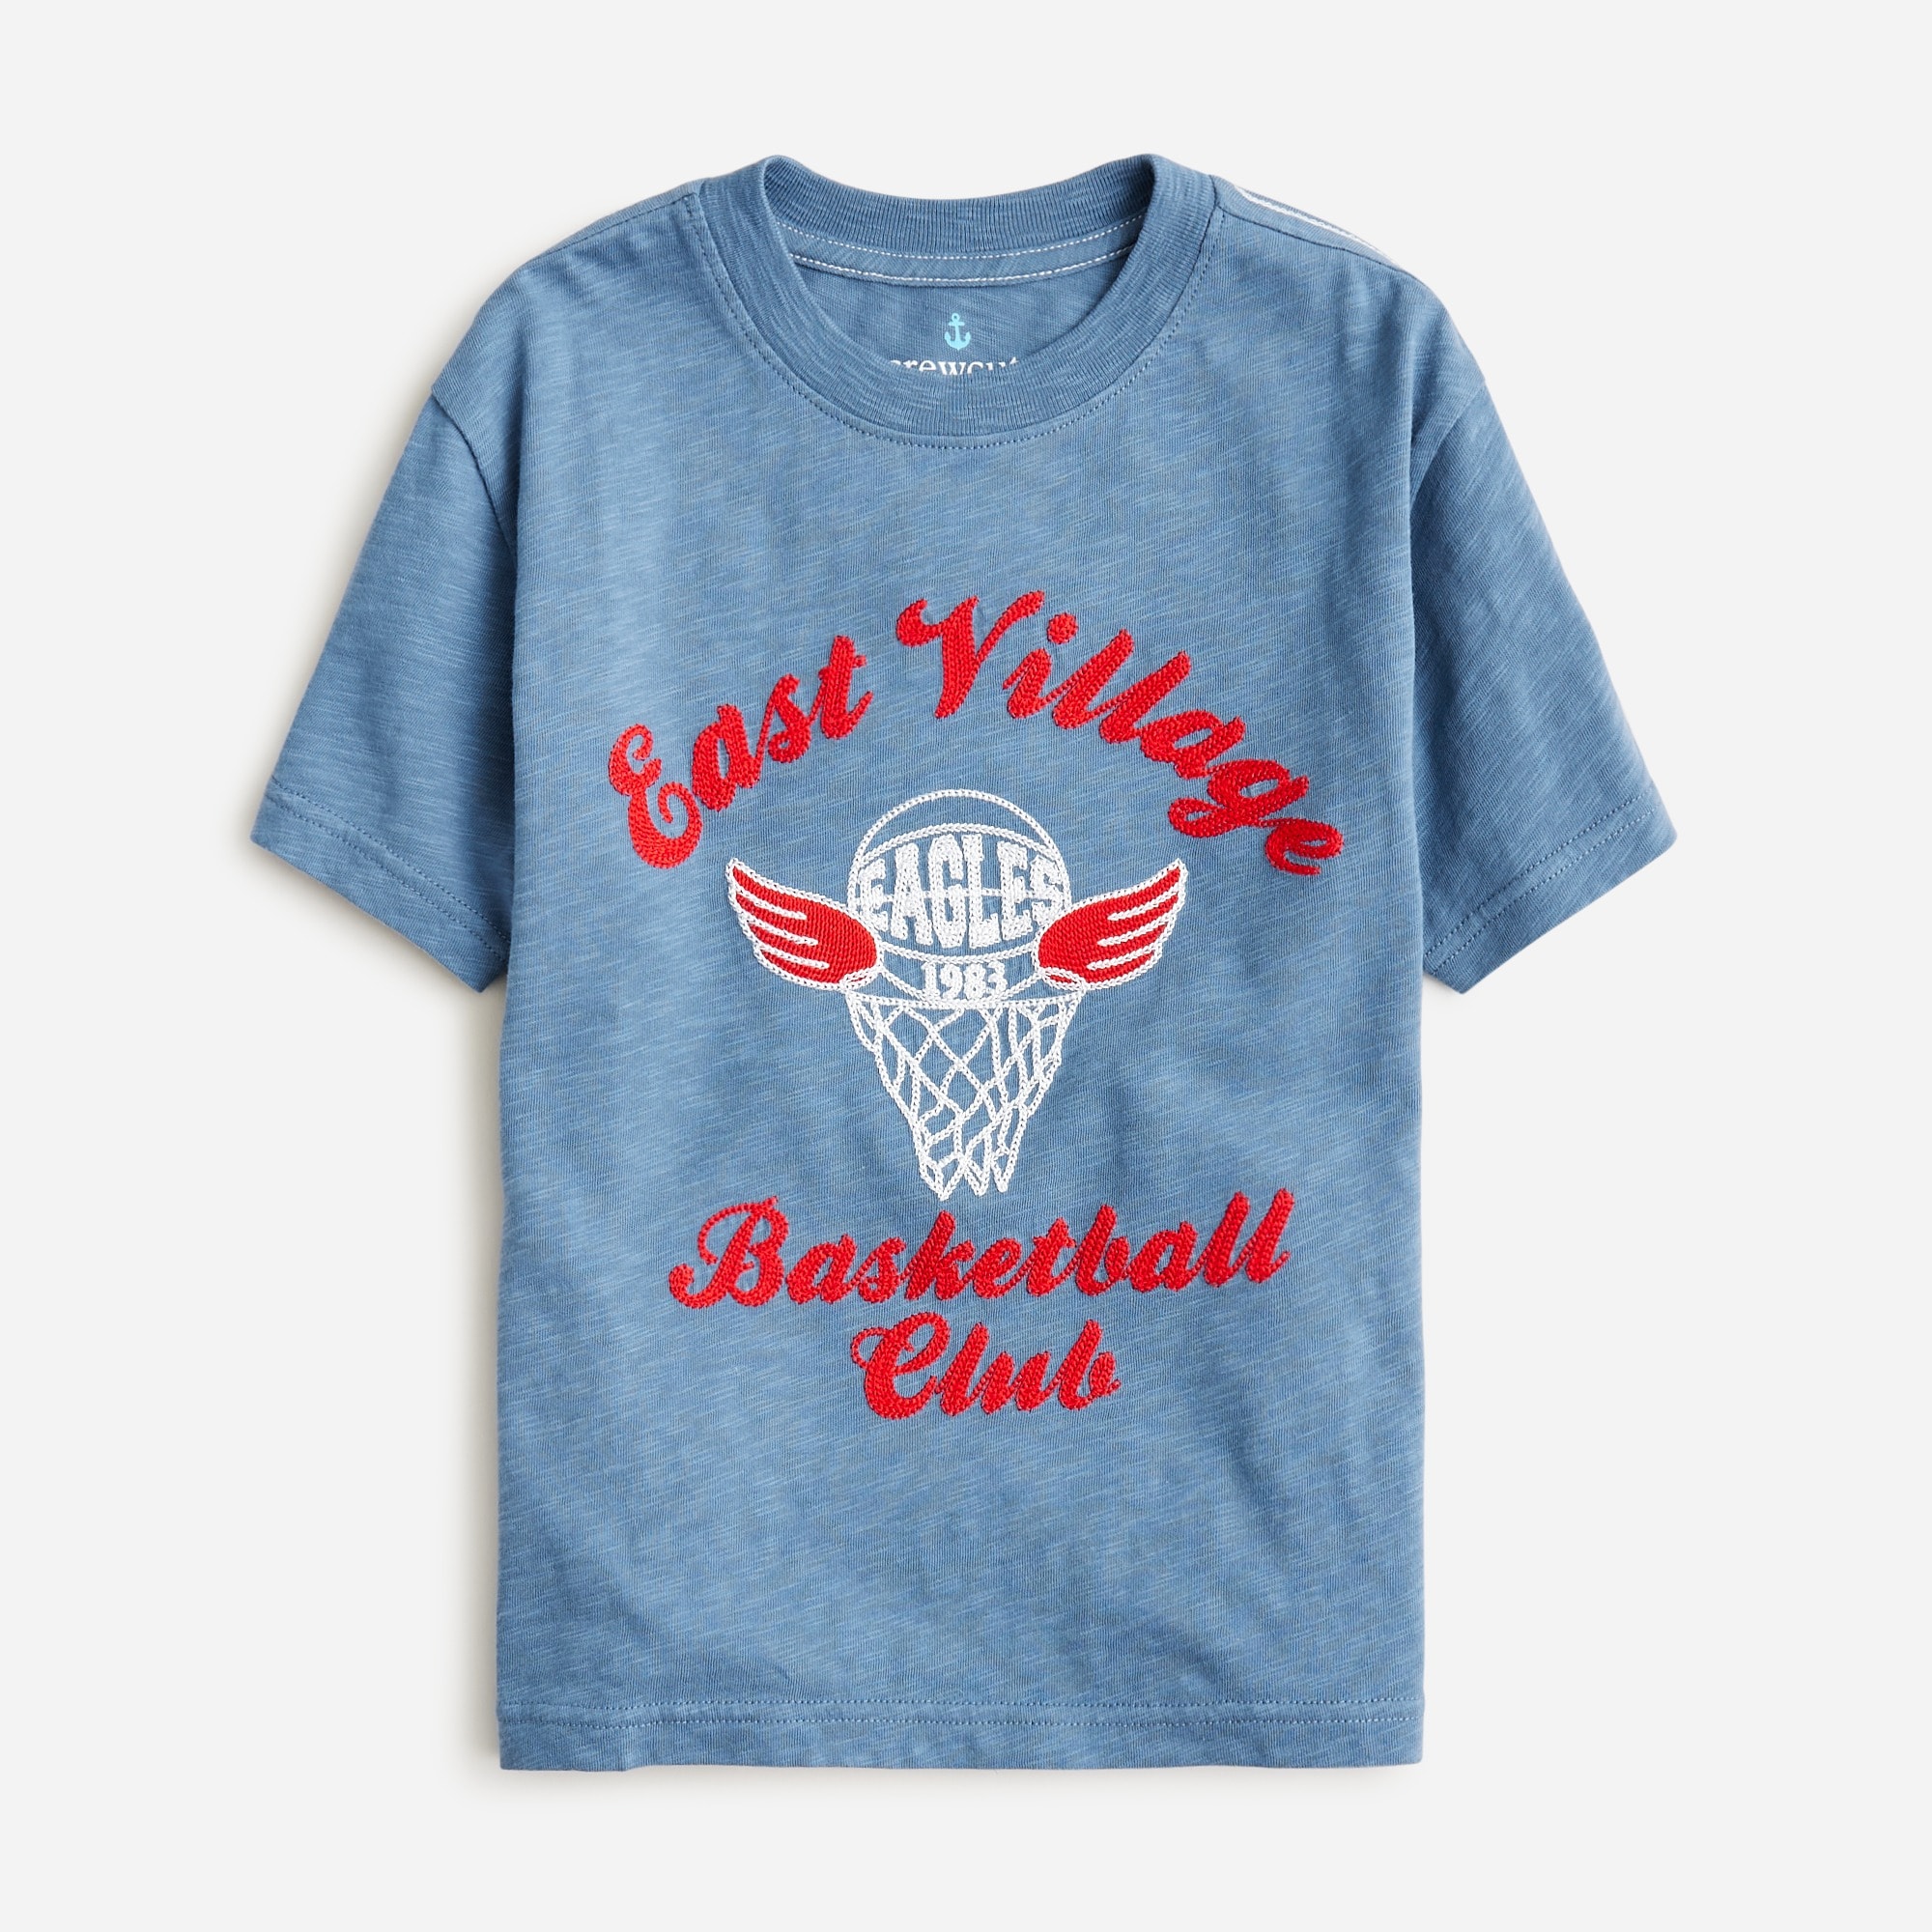 boys Kids' East Village basketball club graphic T-shirt